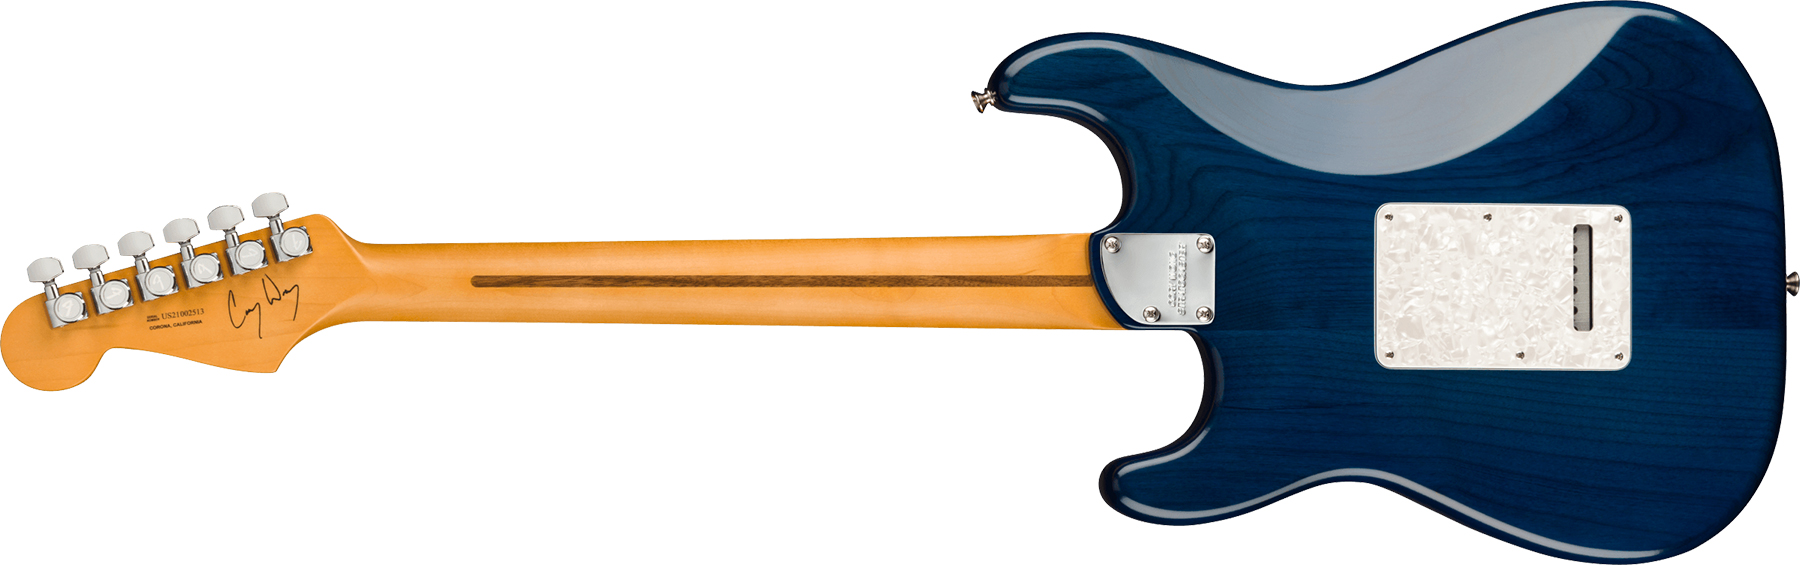 Fender Cory Wong Strat Signature Usa 3s Trem Rw - Sapphire Blue Transparent - E-Gitarre in Str-Form - Variation 1